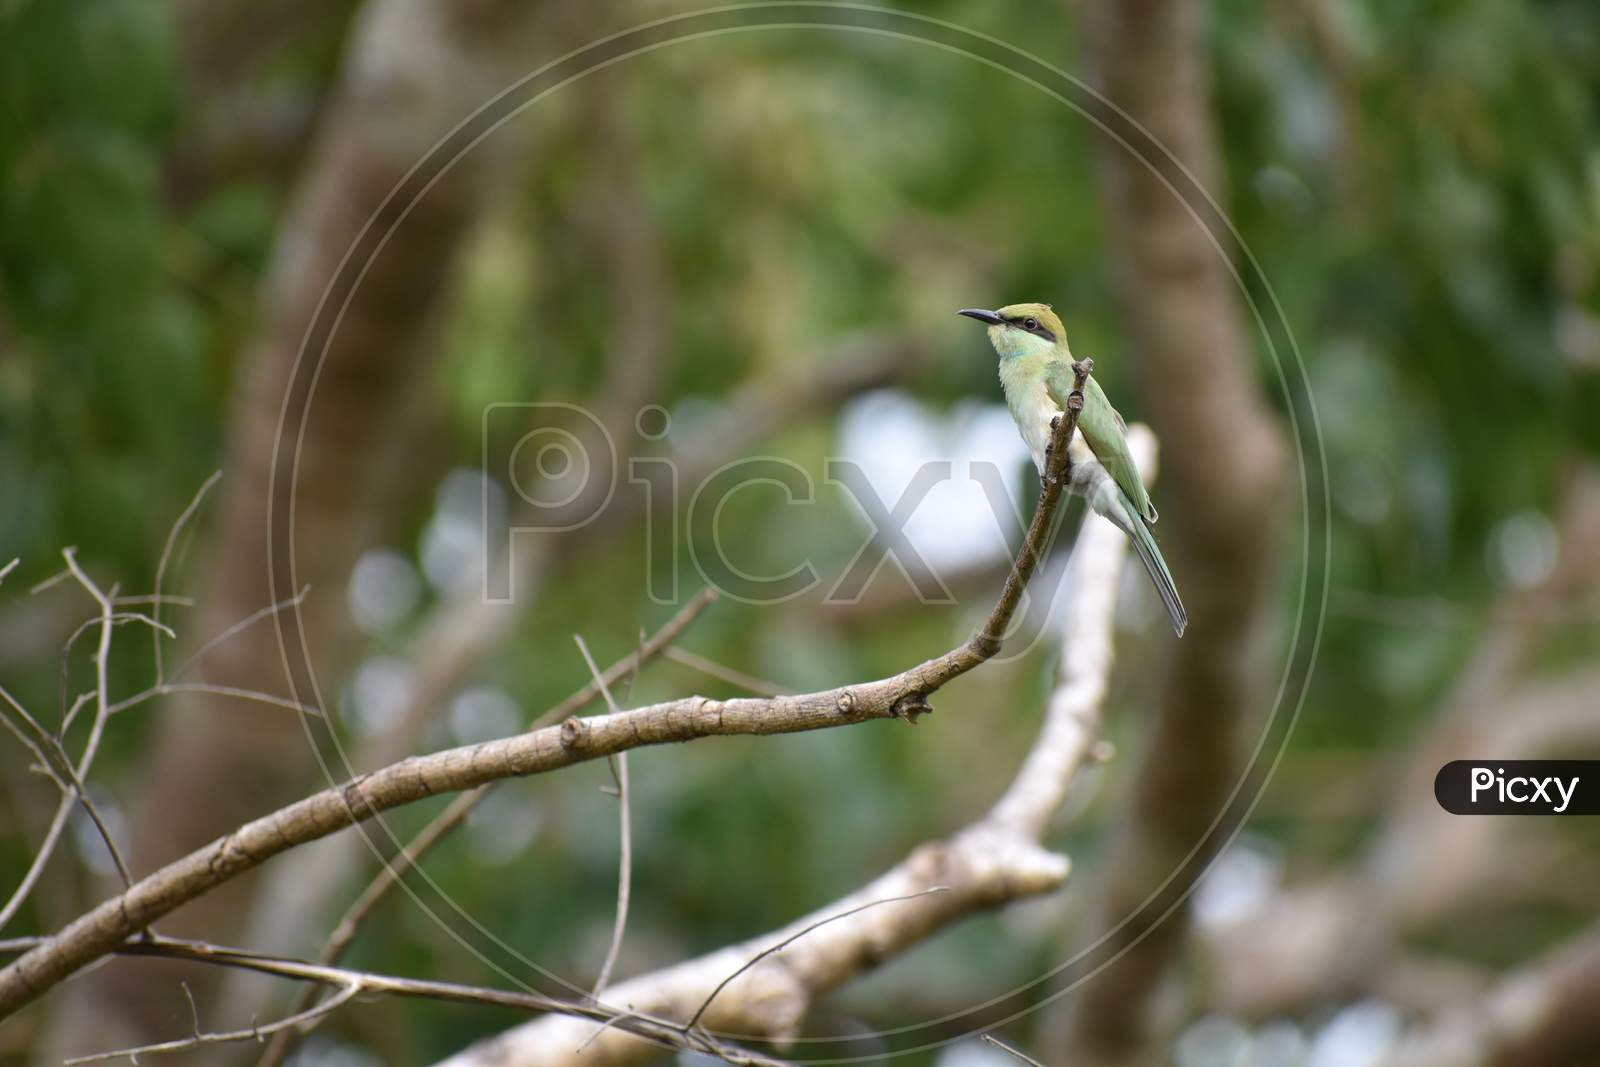 A Bird sitting on a tree